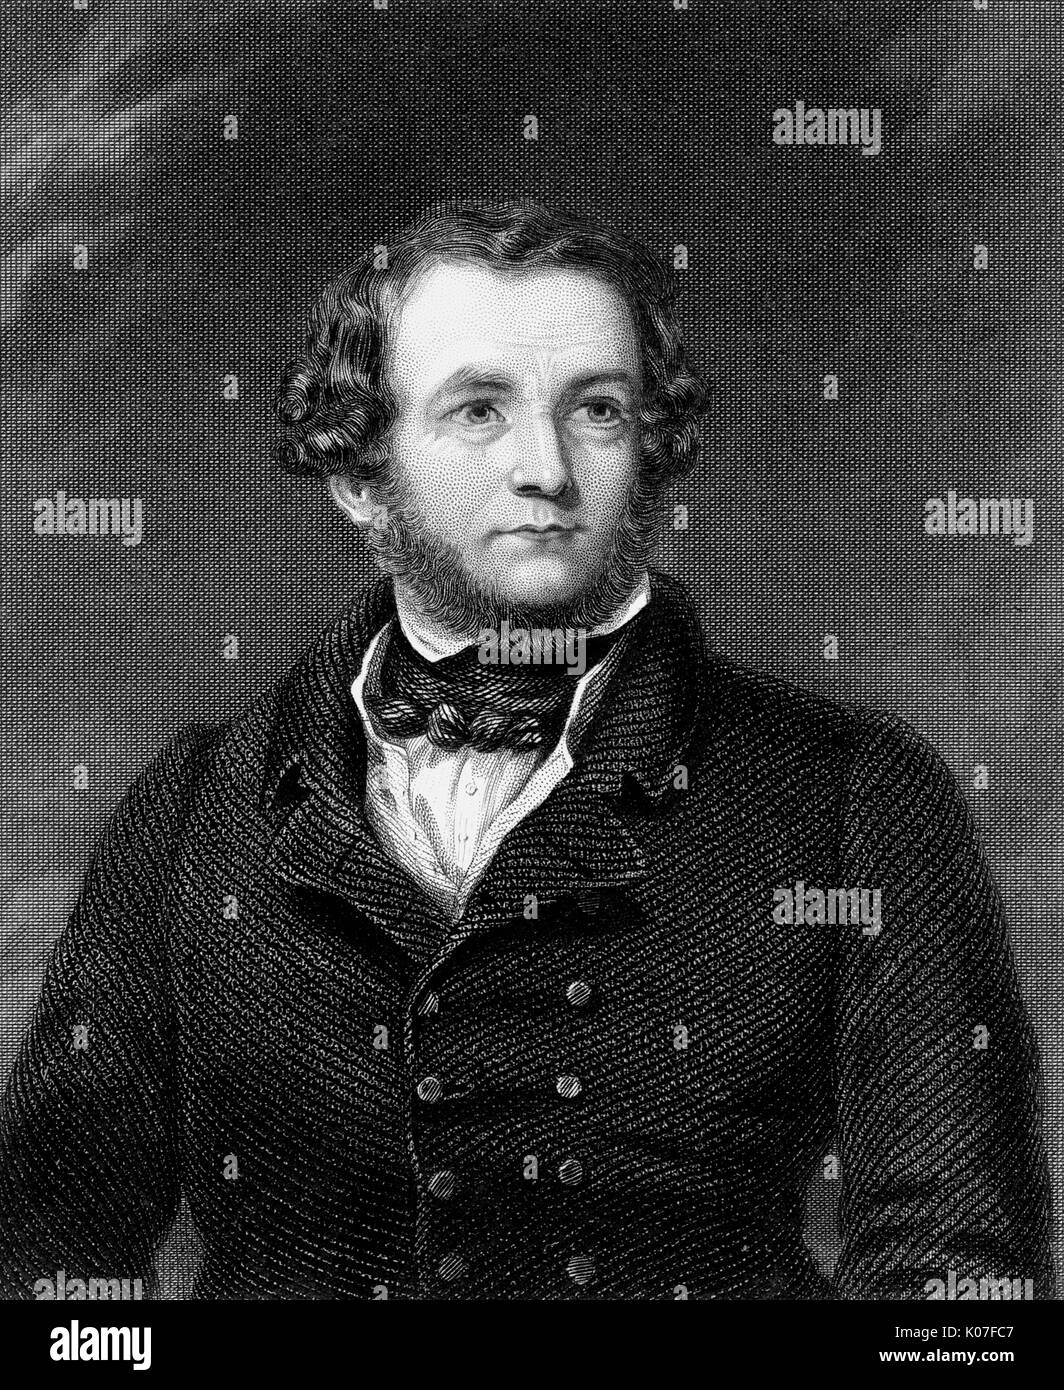 Thomas Simpson (1808 - 1840) - explorer, 'The Arctic  Discoverer', nephew of Sir George Simpson      Date: 1845 Stock Photo